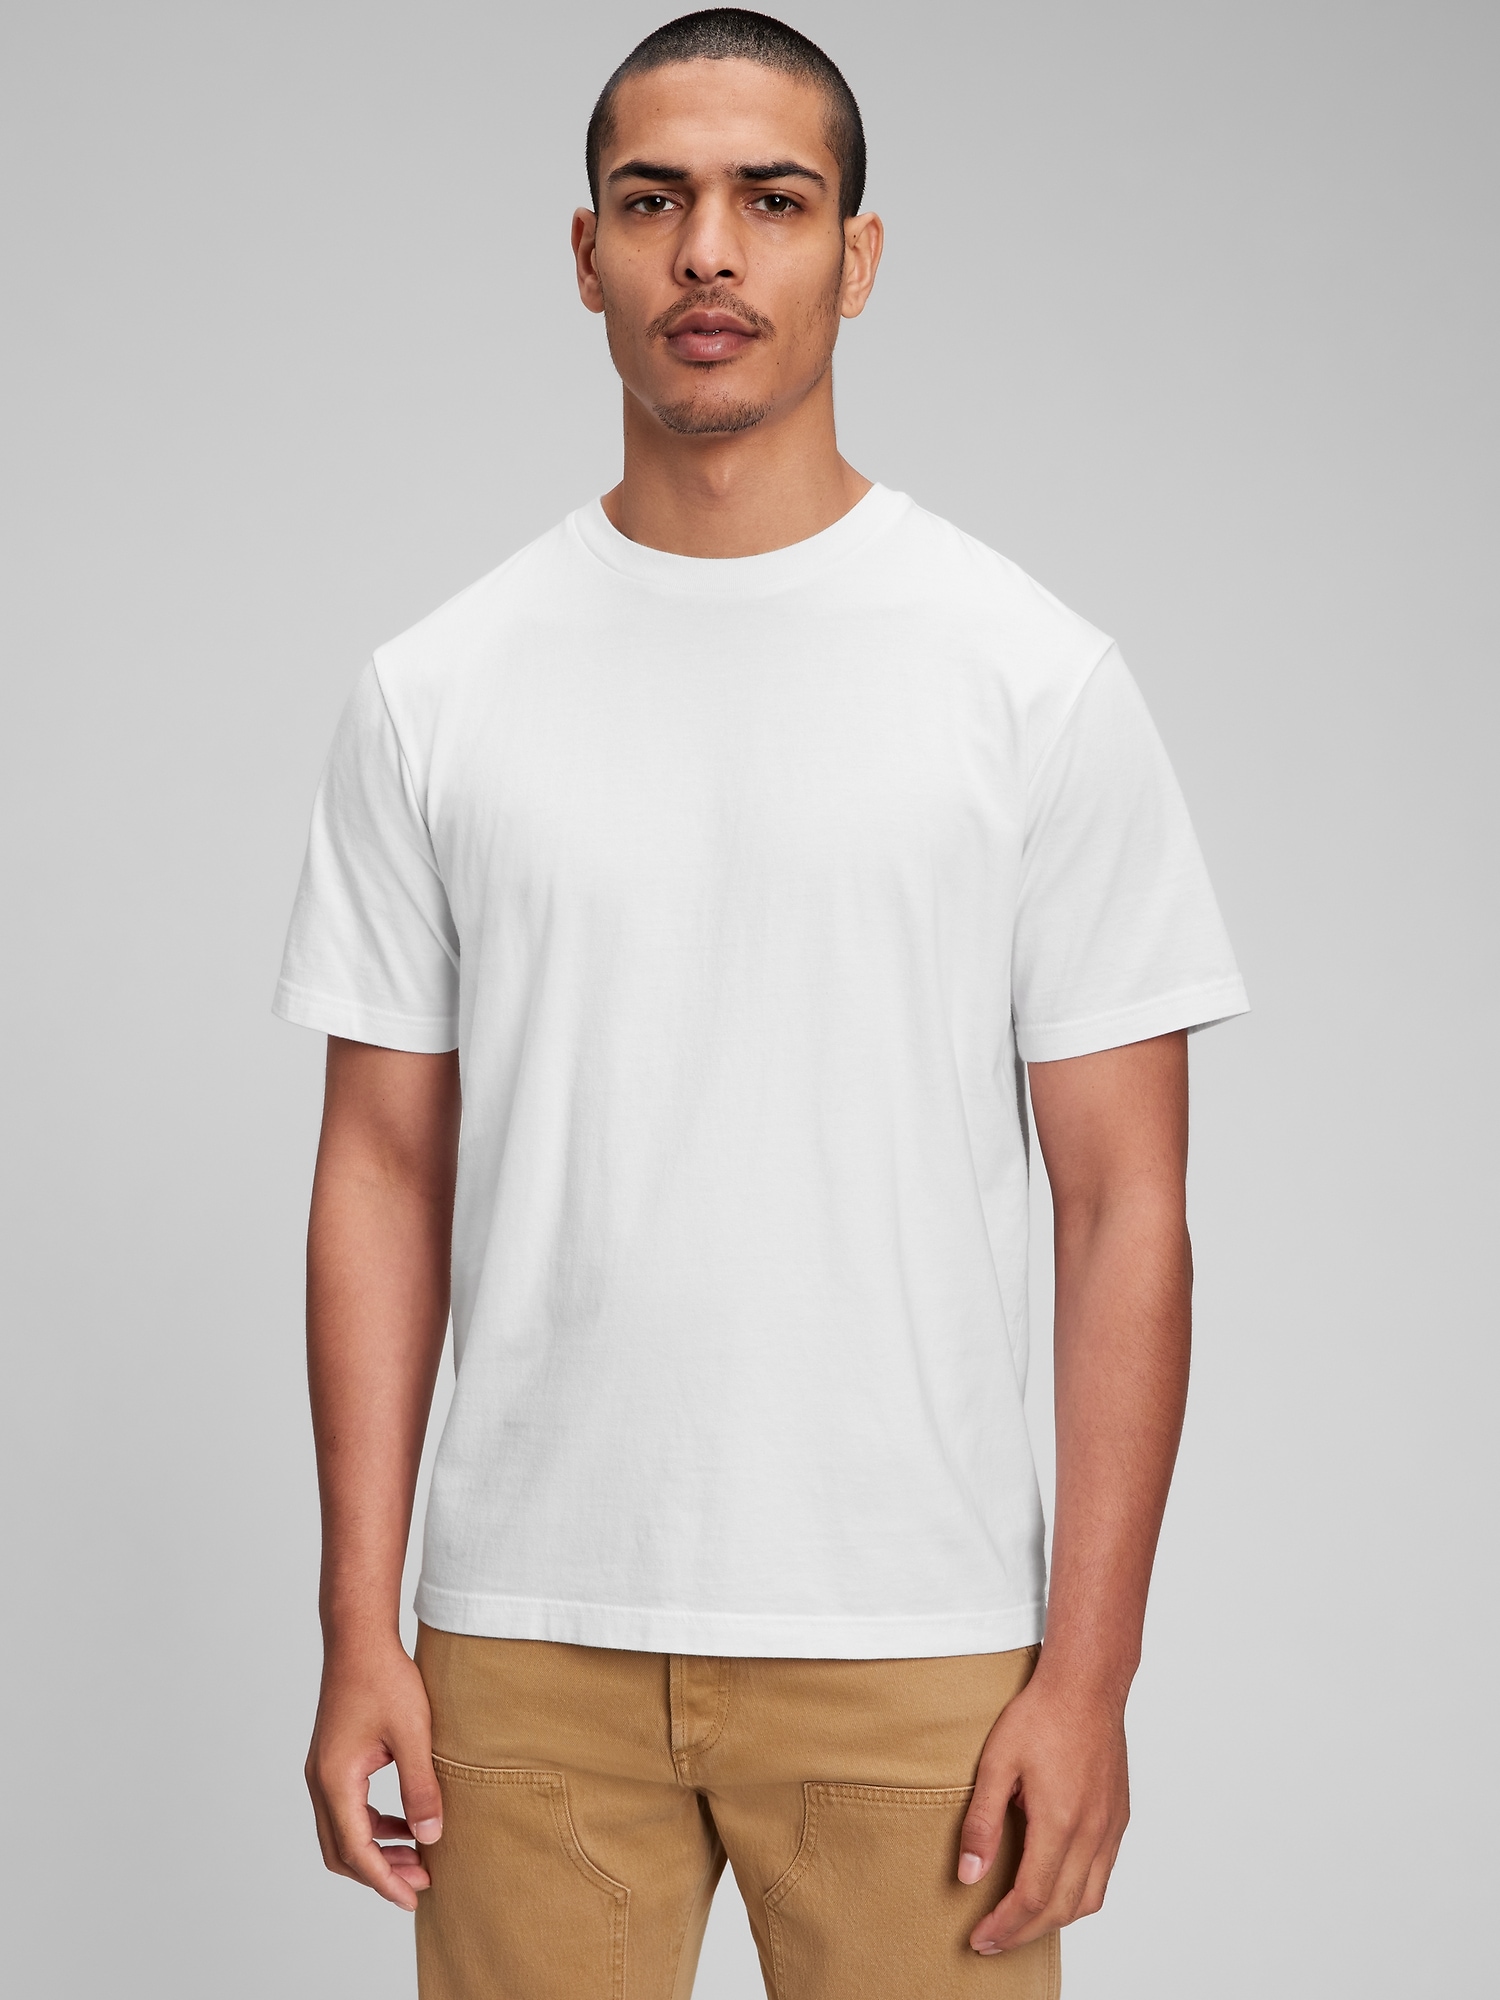 Gap Original T-shirt In White